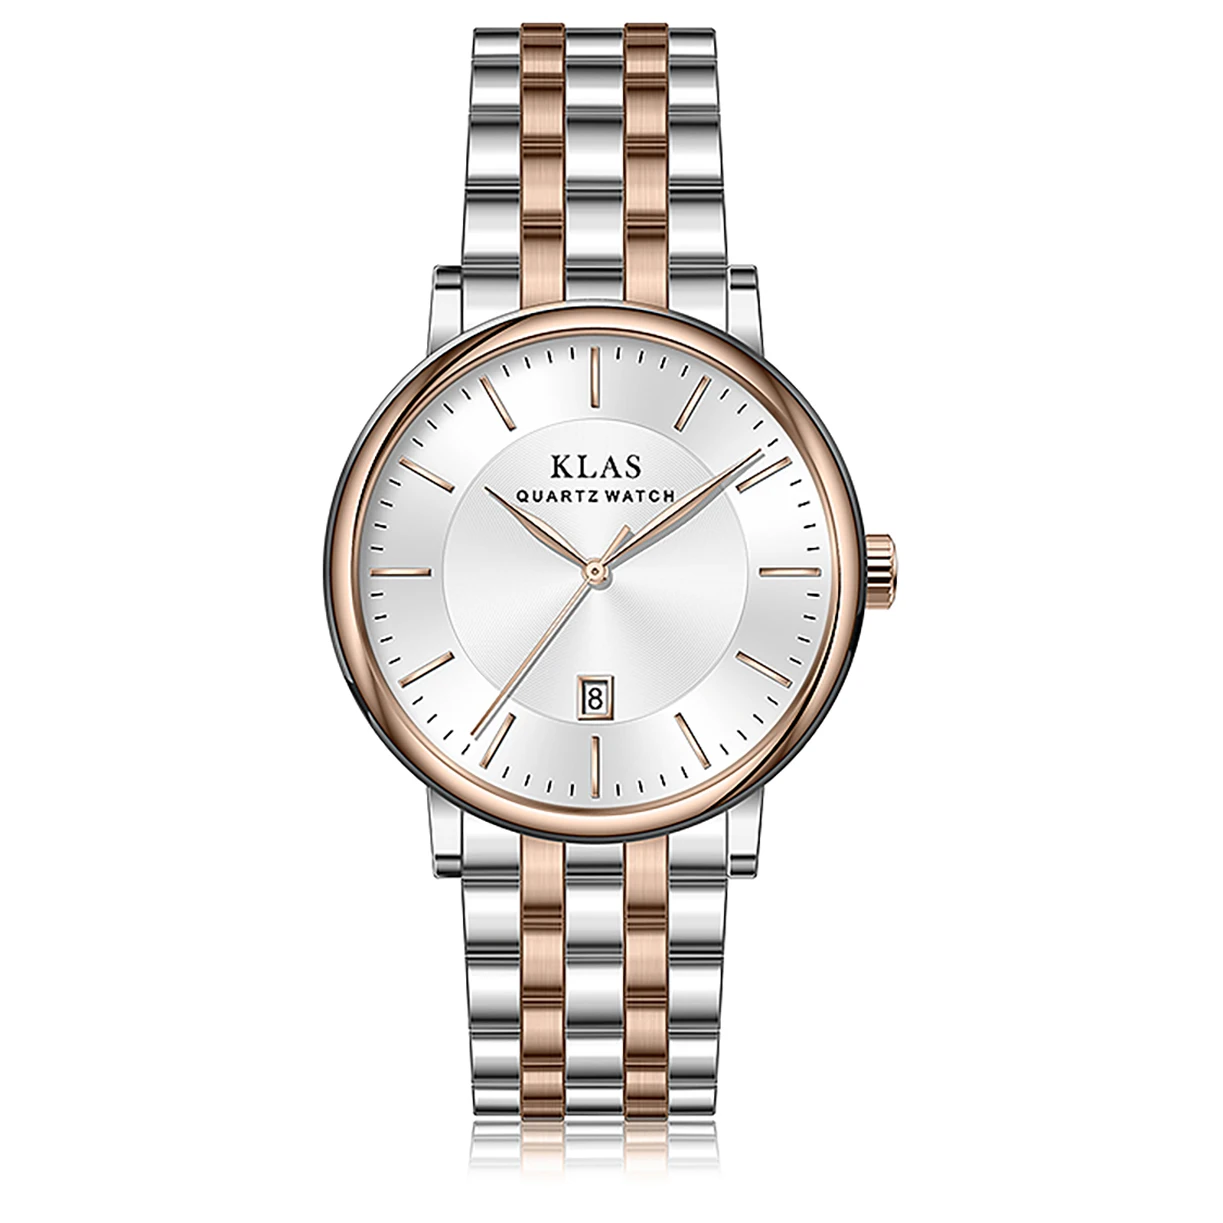 New Top Brand Stainless Steel Timer Quartz Watch Men's Fashion Sports Automatic Watch KLAS brand